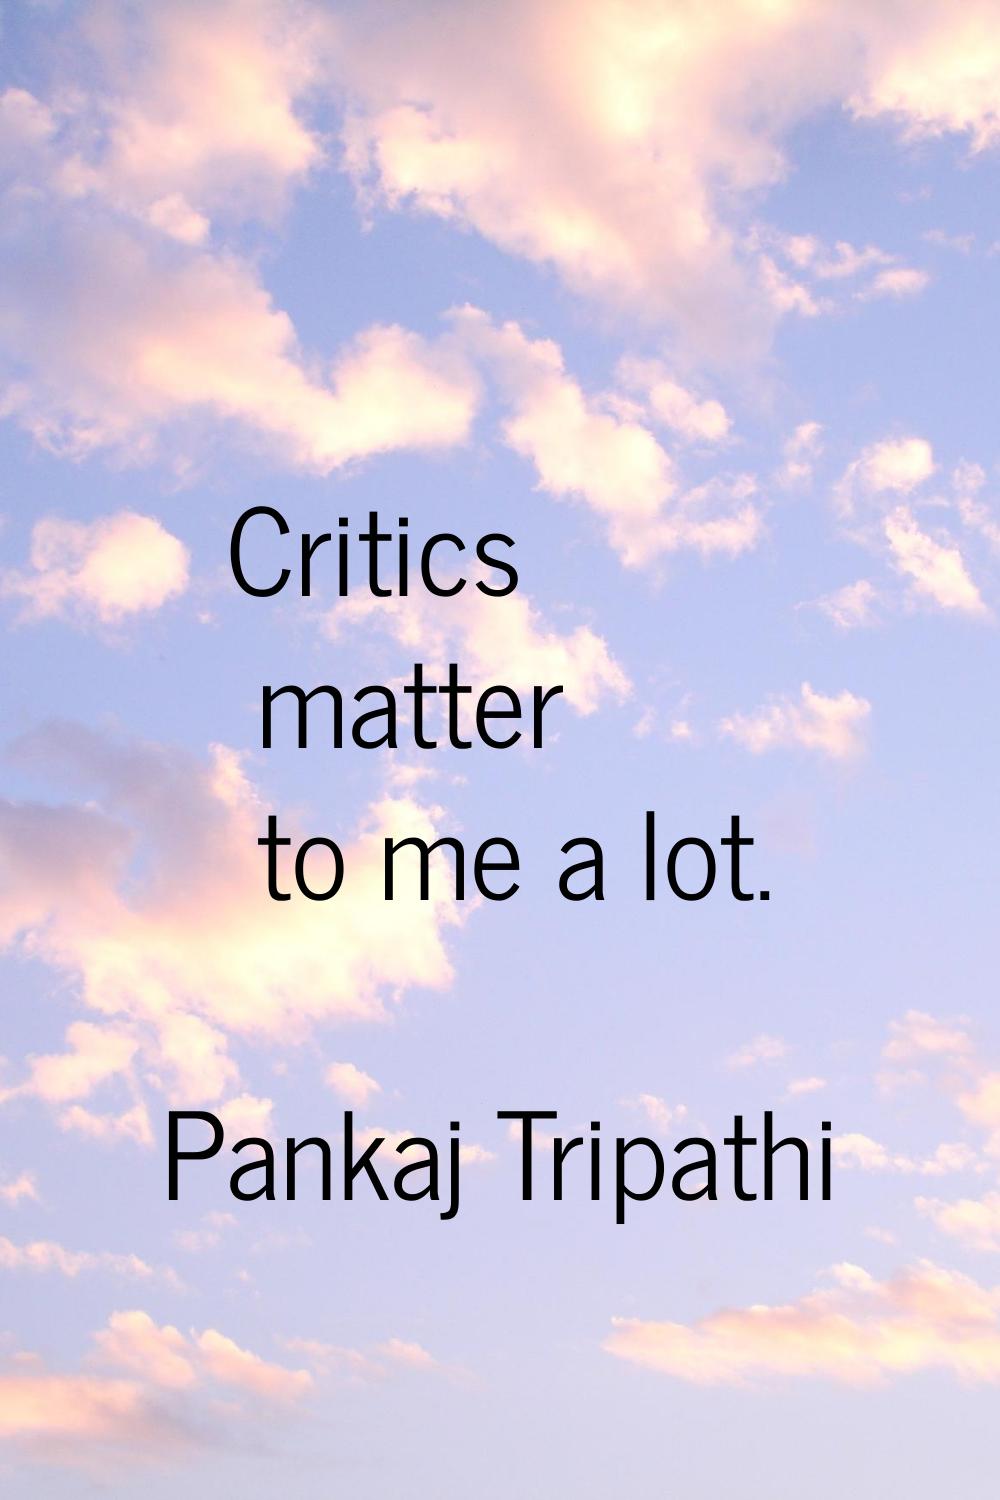 Critics matter to me a lot.